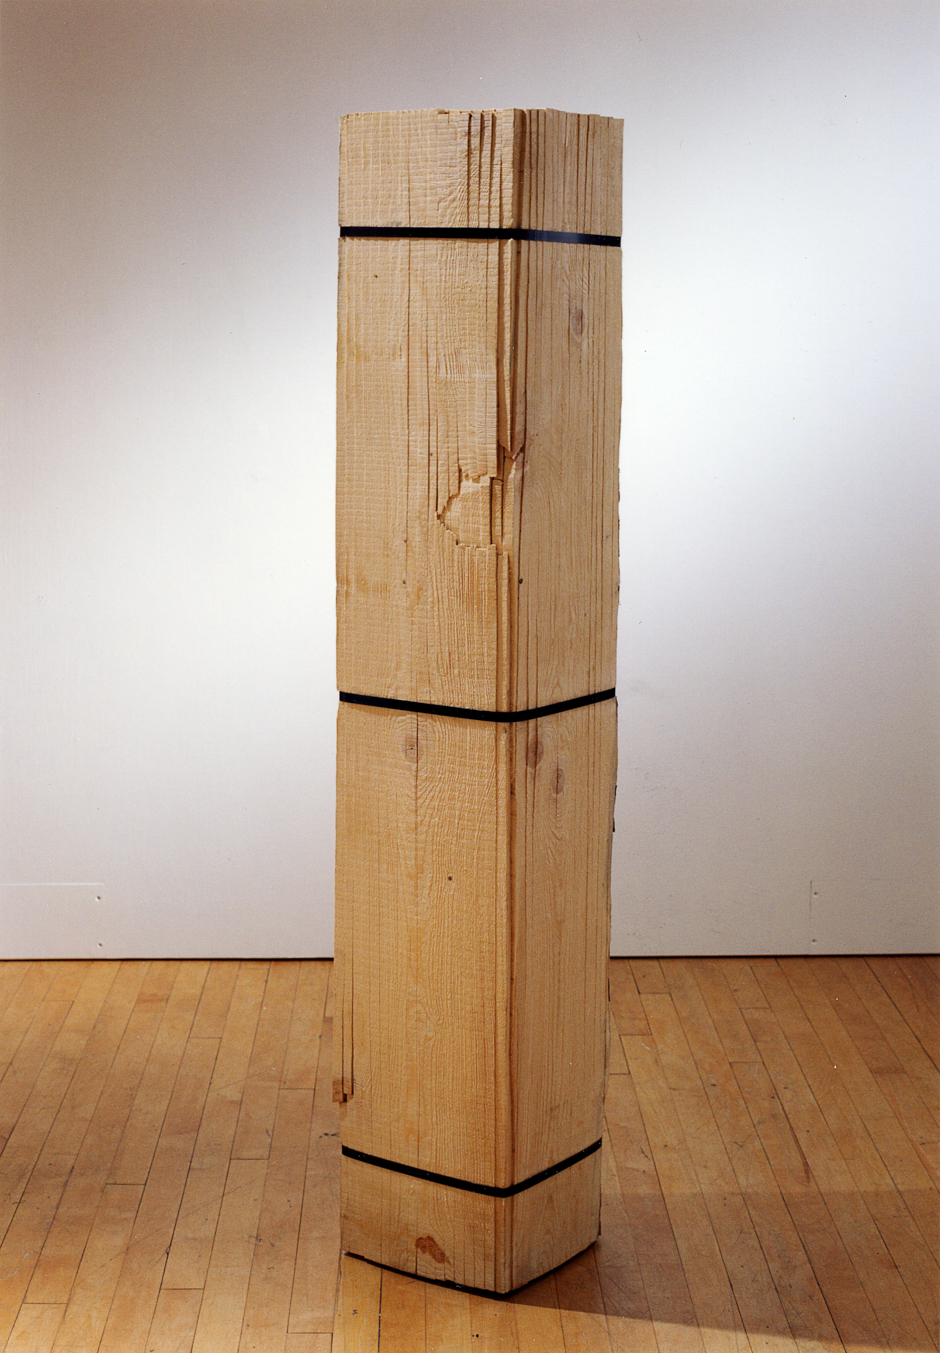 Image of floor standing "Measure VIII" sculpture created from bandsawn wood